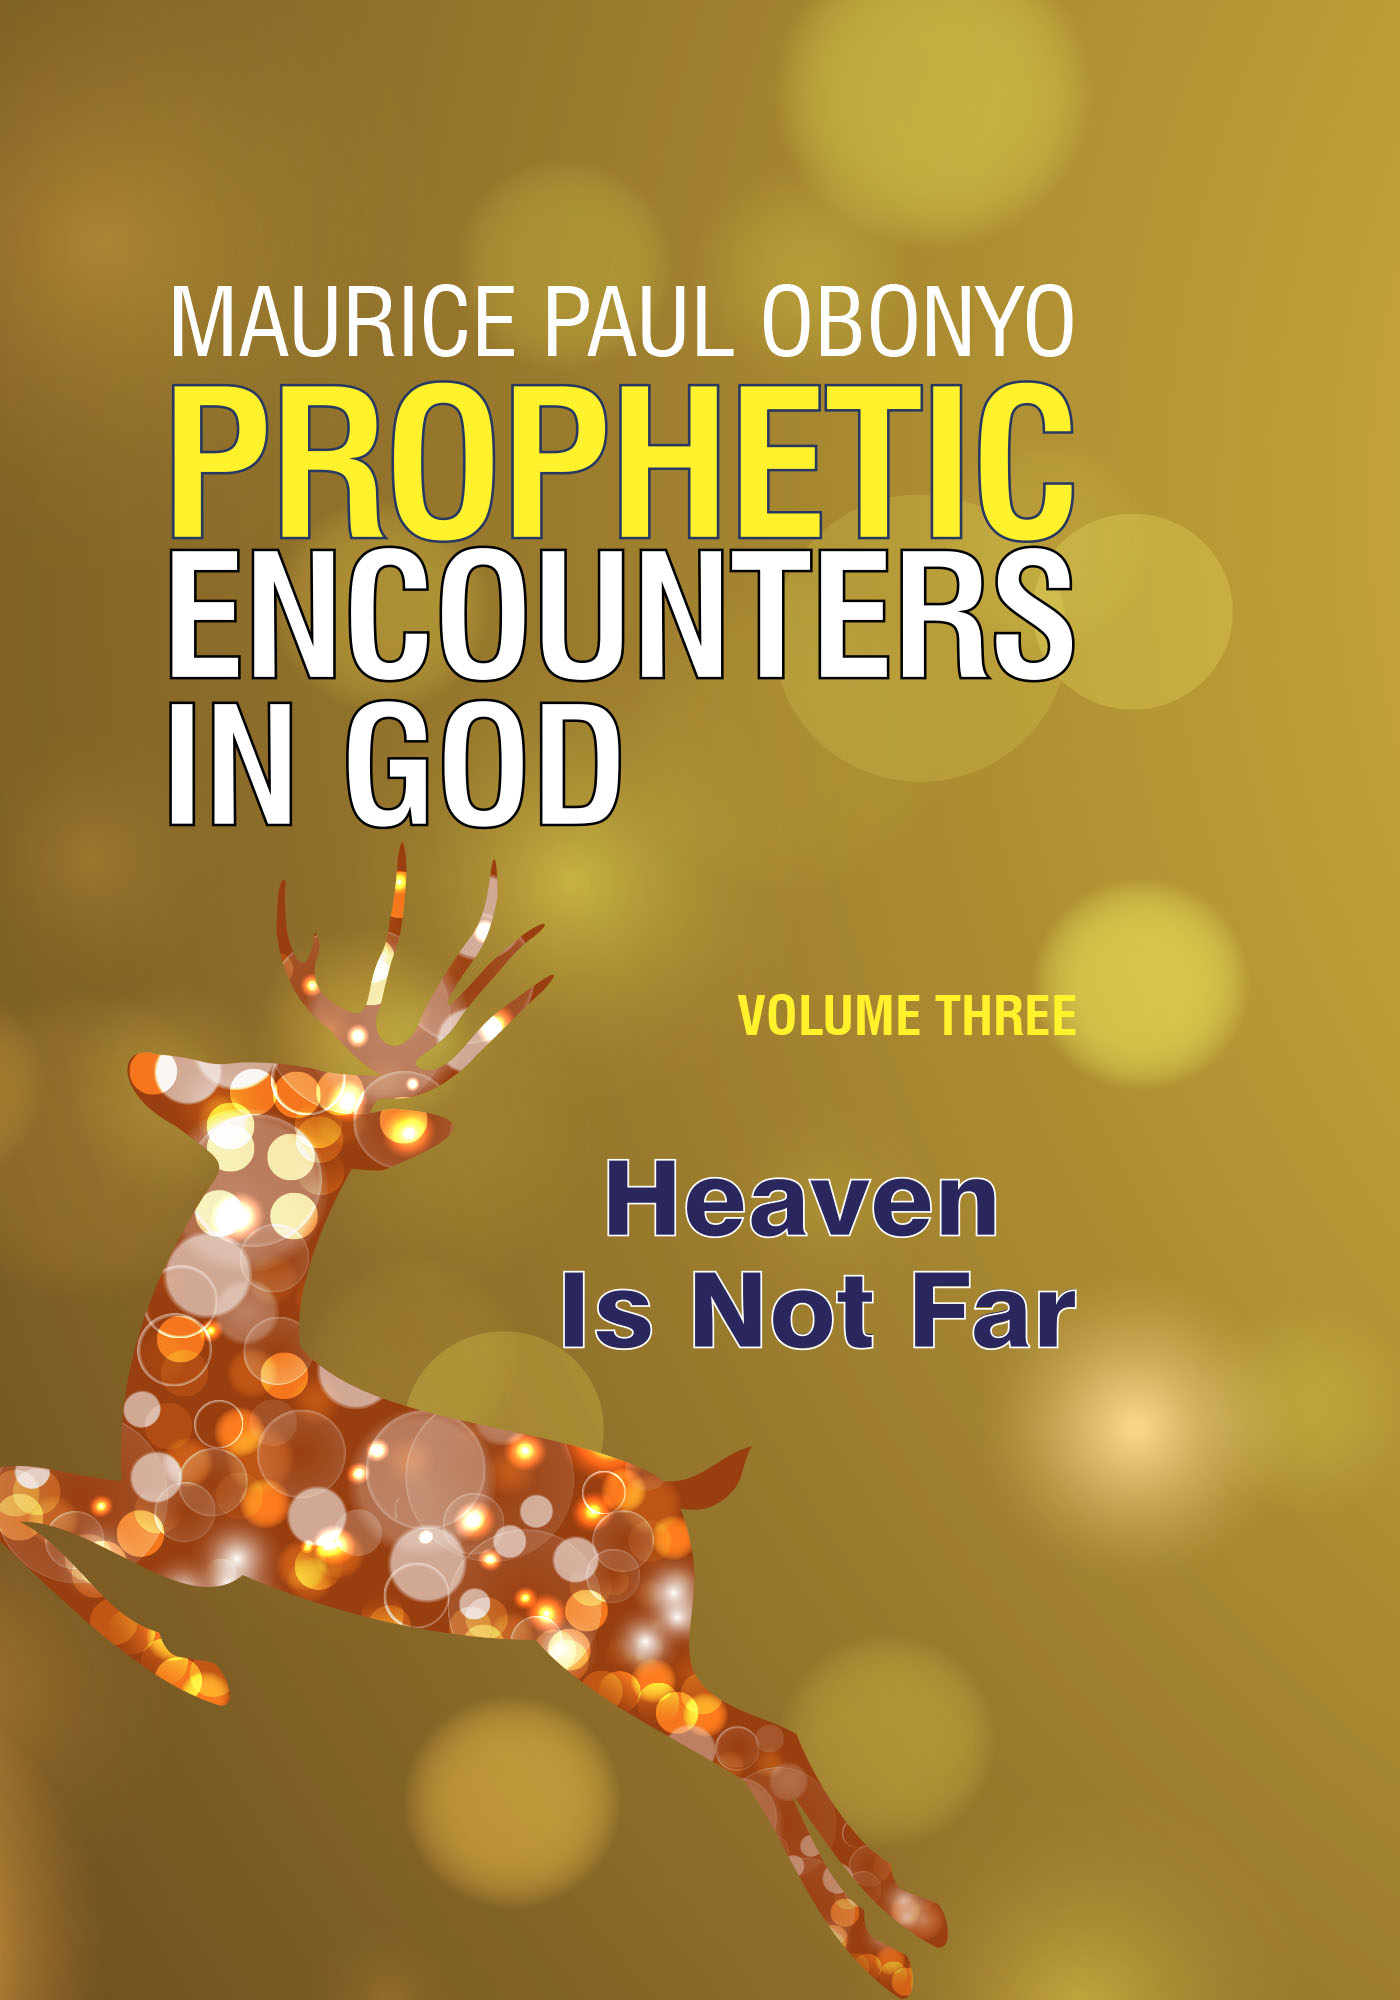 FREE: Prophetic Encounters In God: Heaven Is Not Far by Maurice Paul Obonyo